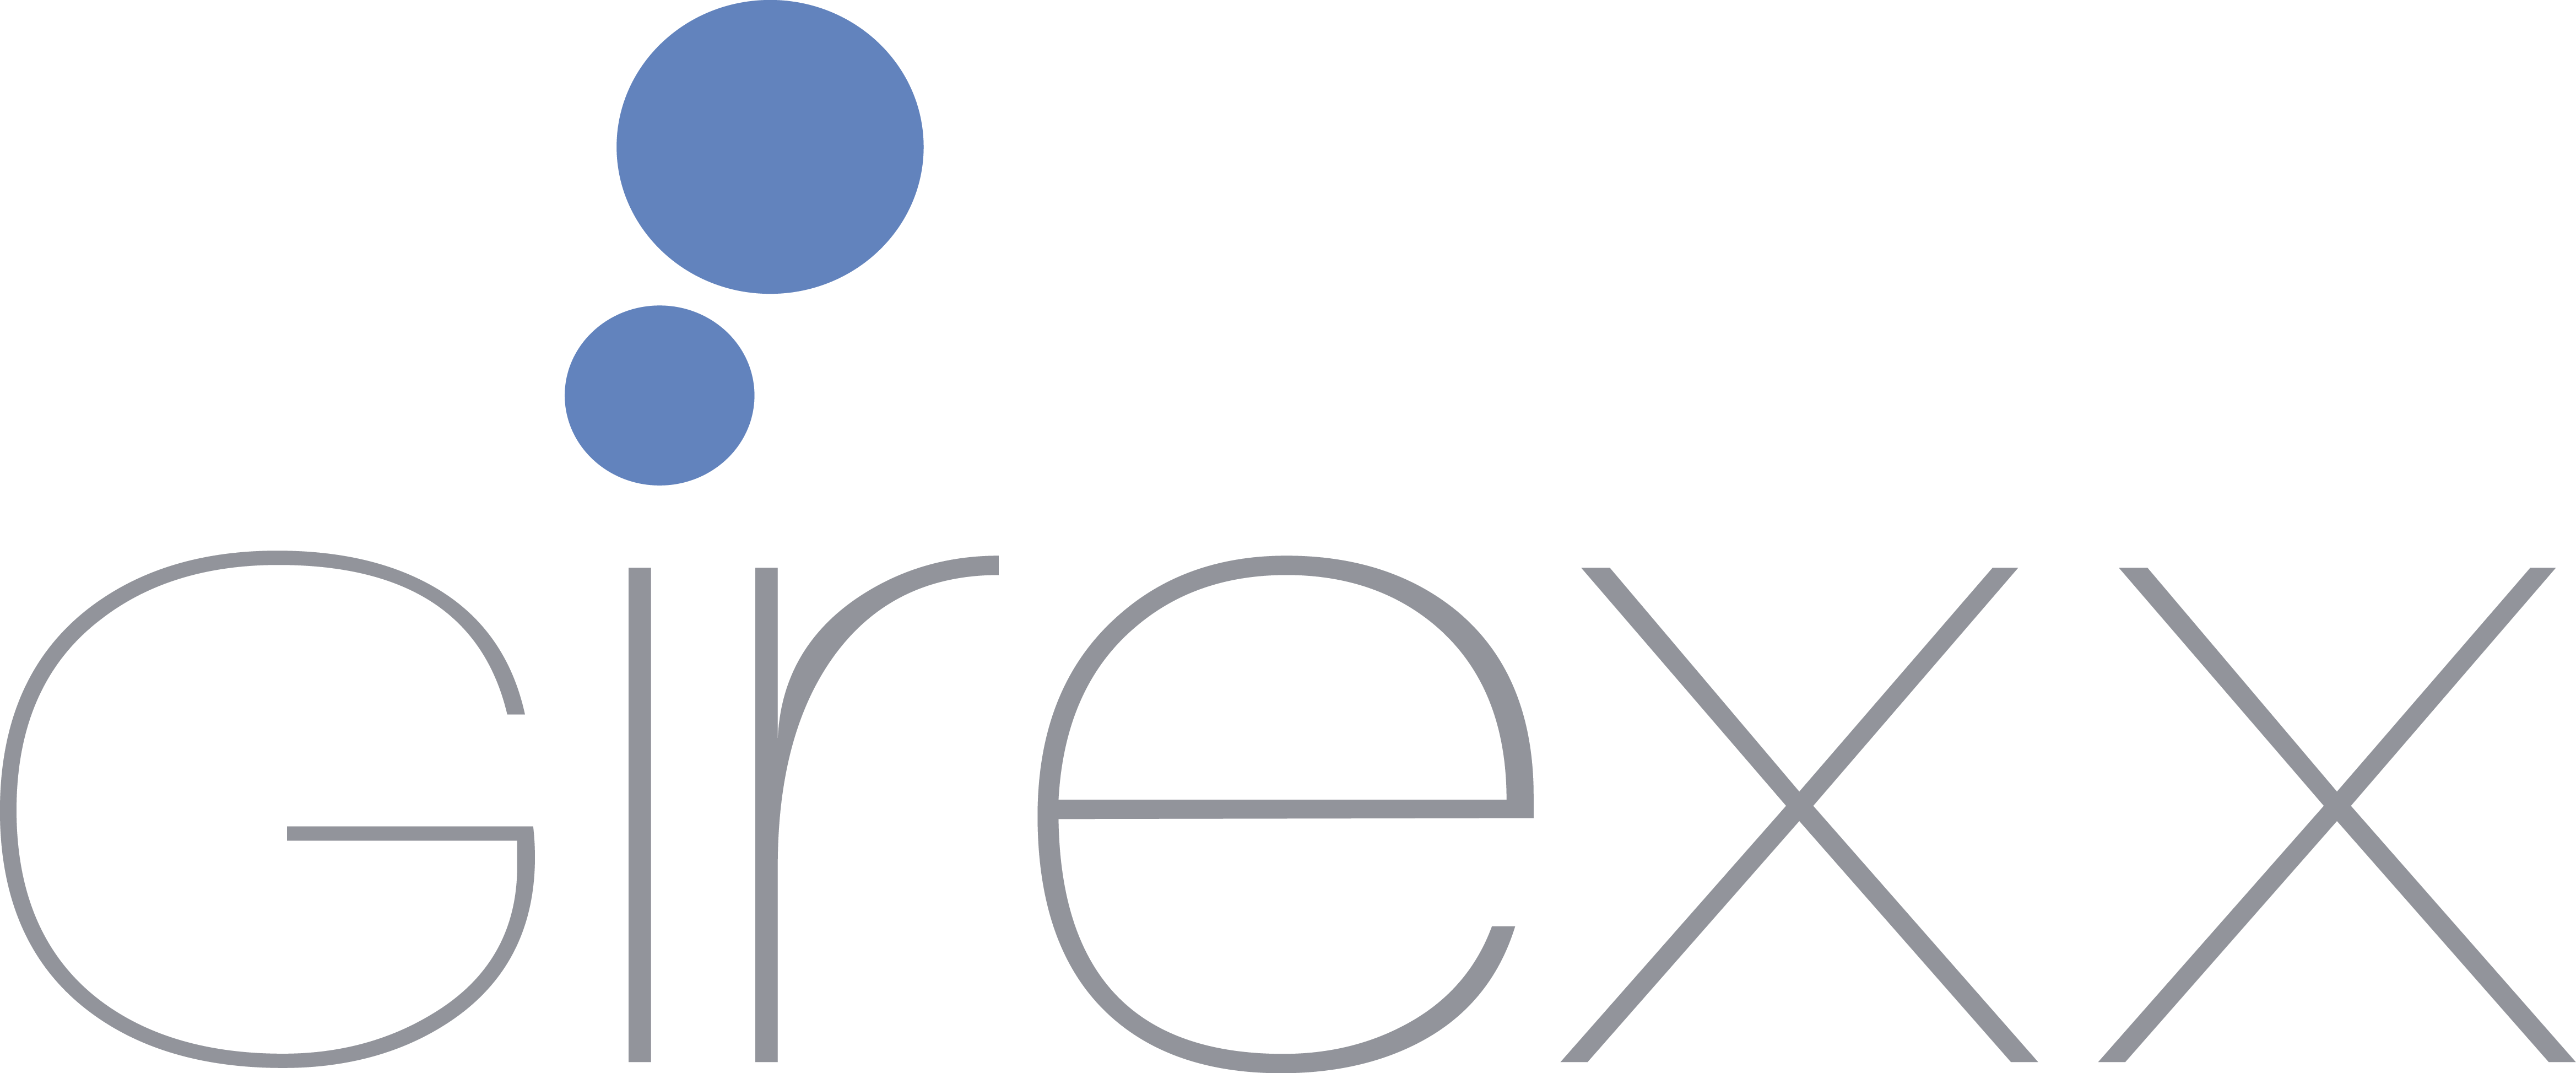 girexx fertility boost